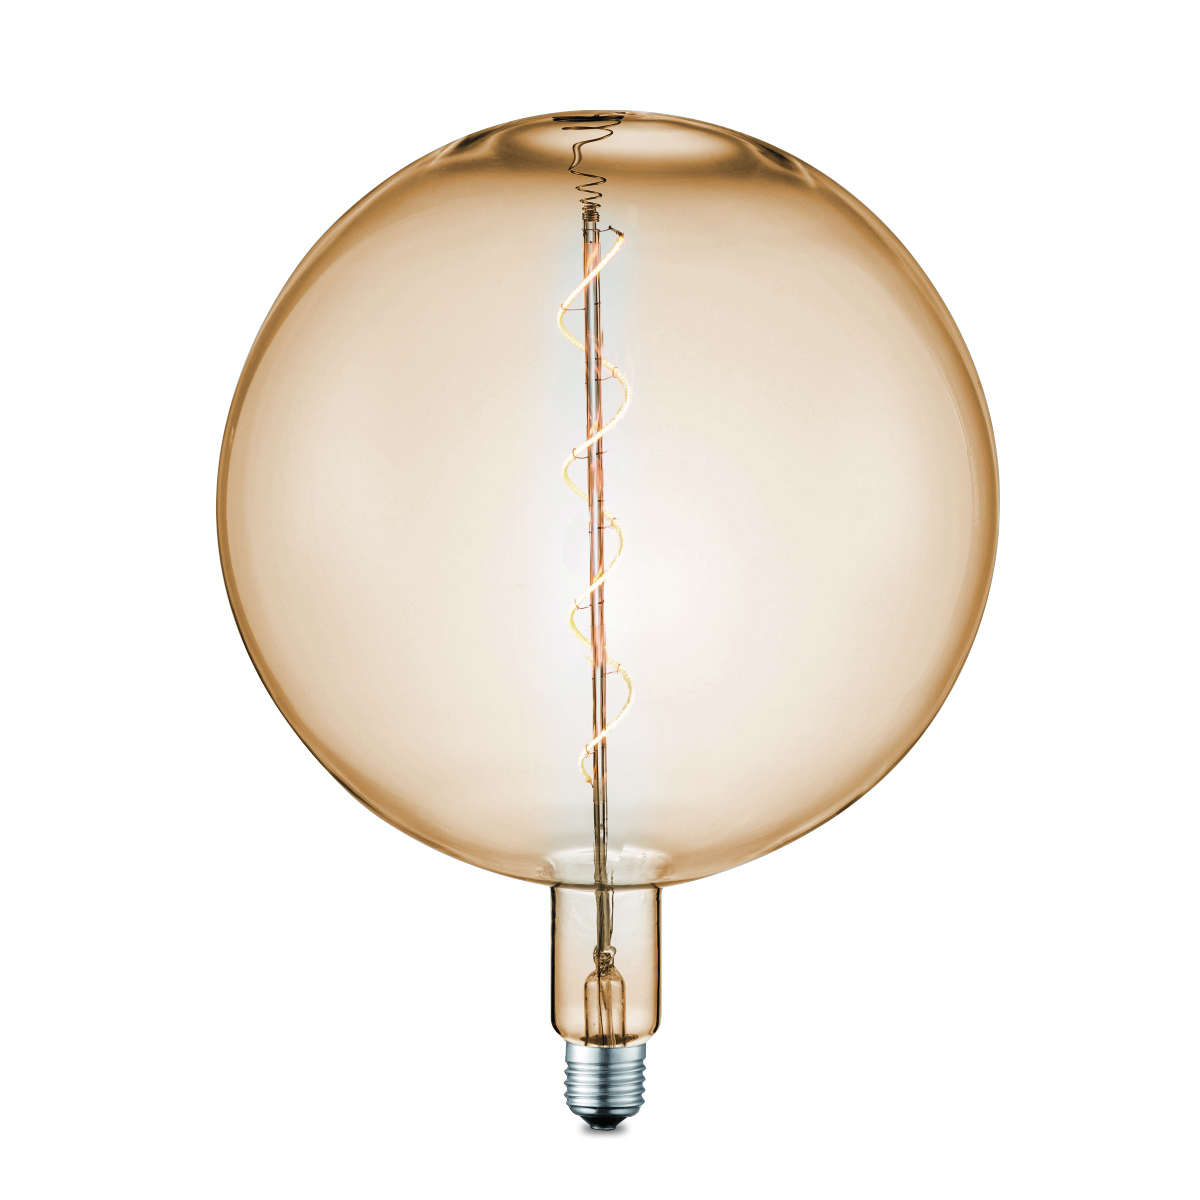 Tangla lighting - TLB-8014-04AM - LED Light Bulb Single Spiral filament - G260 4W amber - dimmable - E27